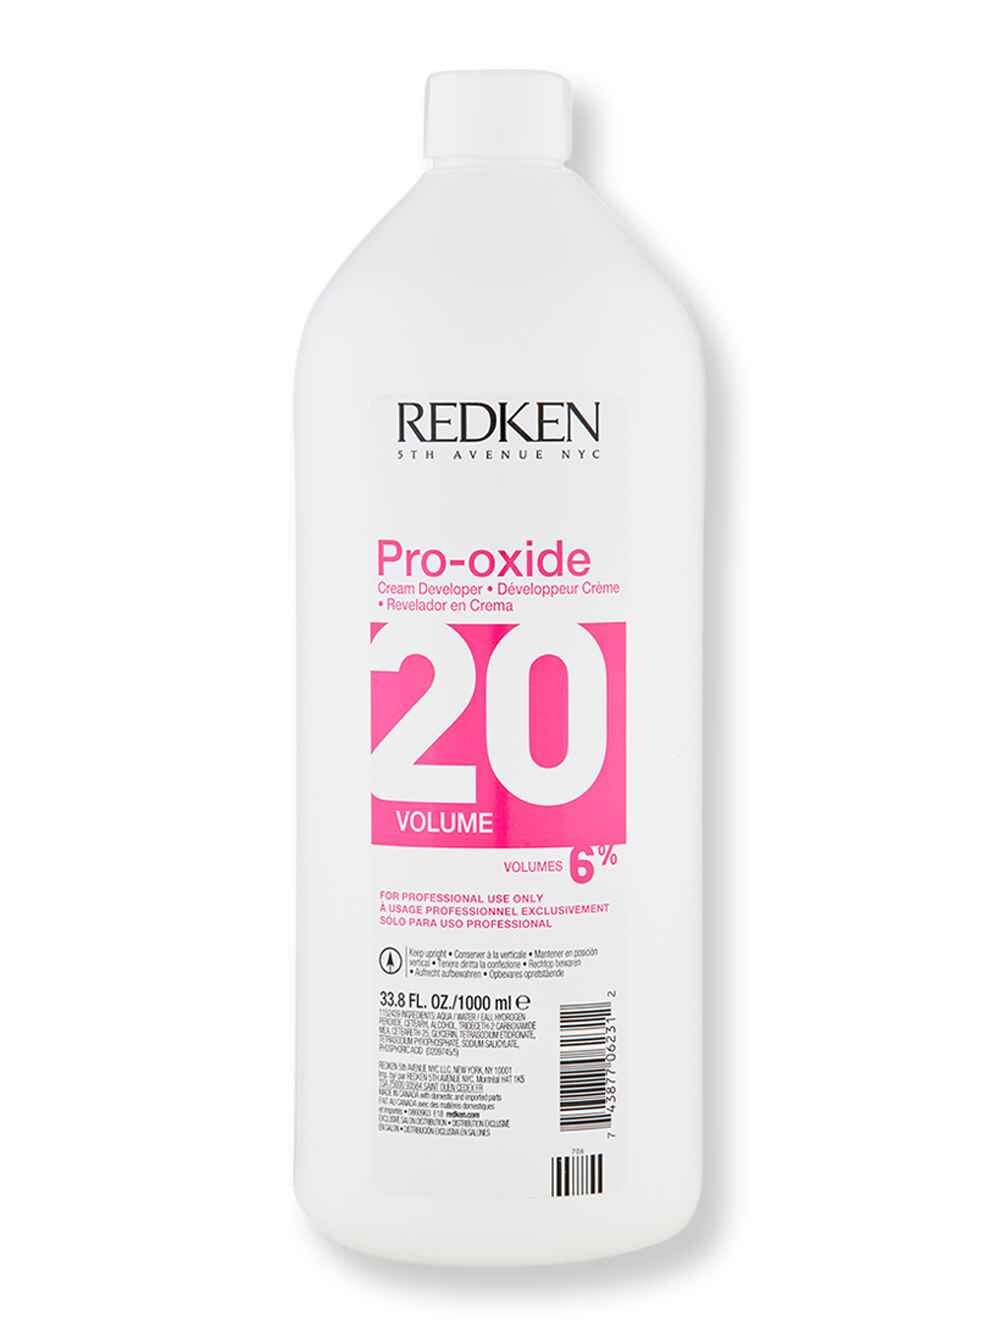 Redken Redken Pro-Oxide Cream Developer 20 Volume Liter Hair & Scalp Repair 